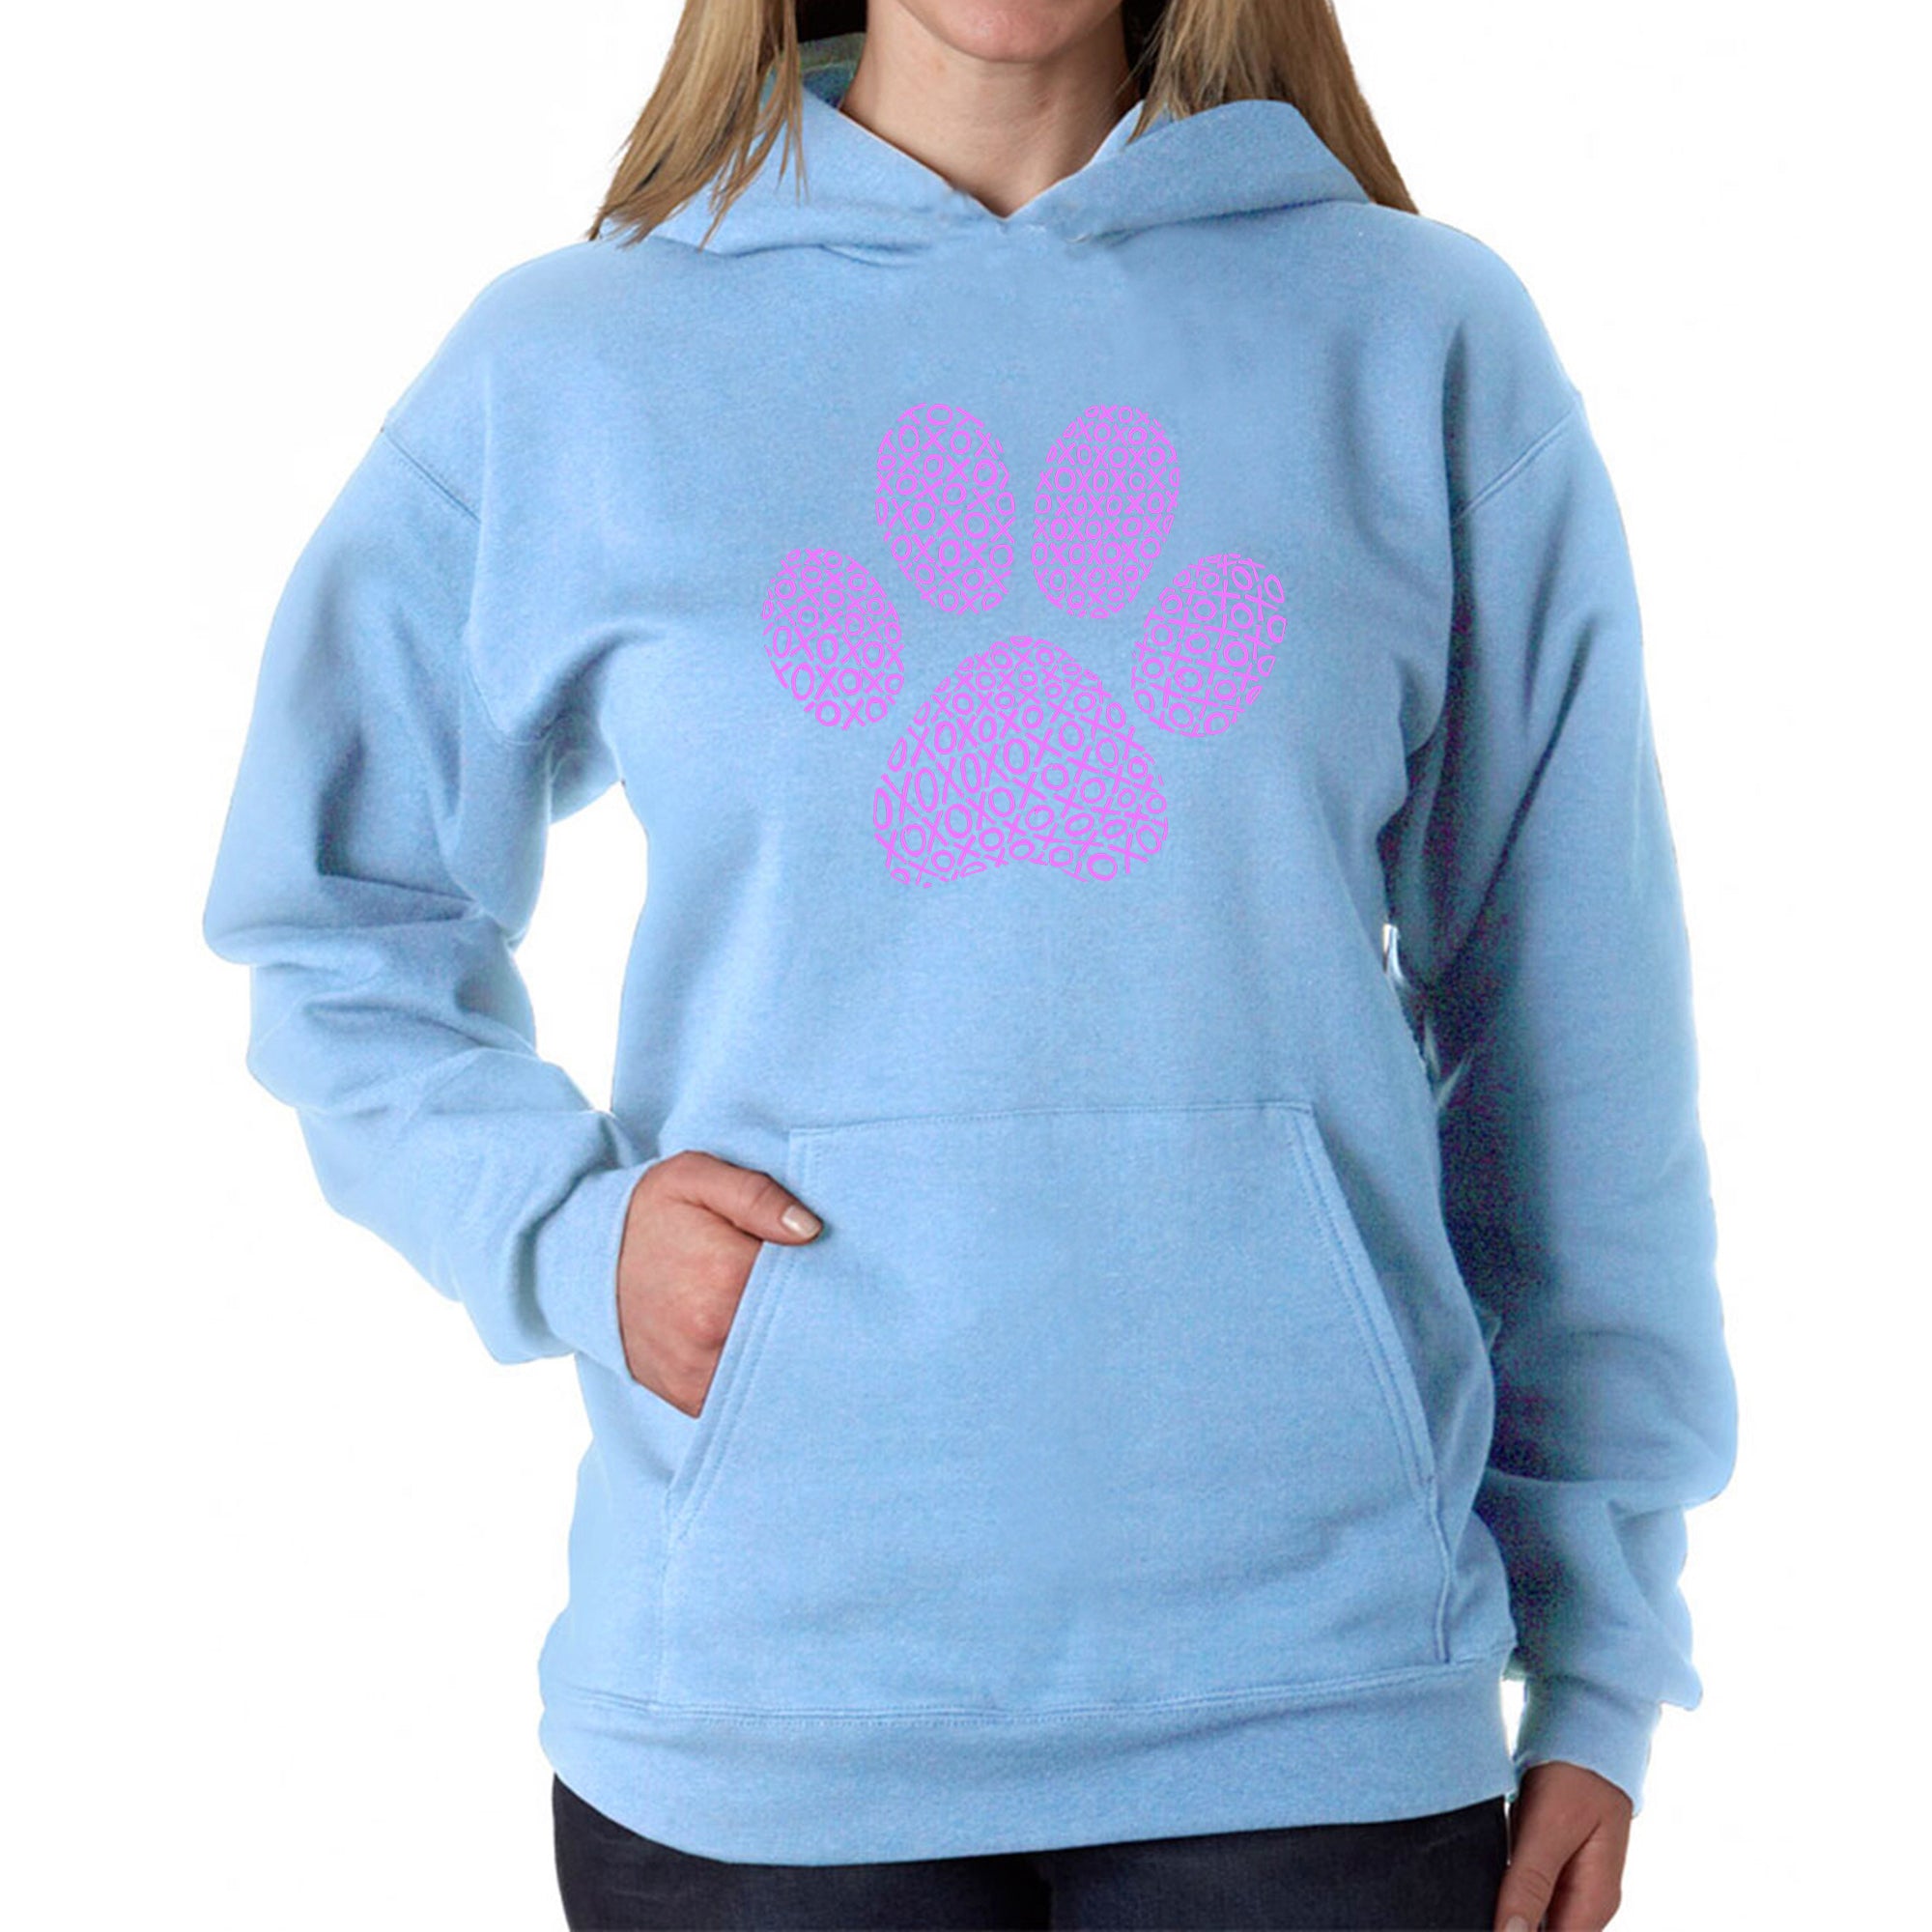 XOXO Dog Paw - Women's Word Art Hooded Sweatshirt - Blue - Small